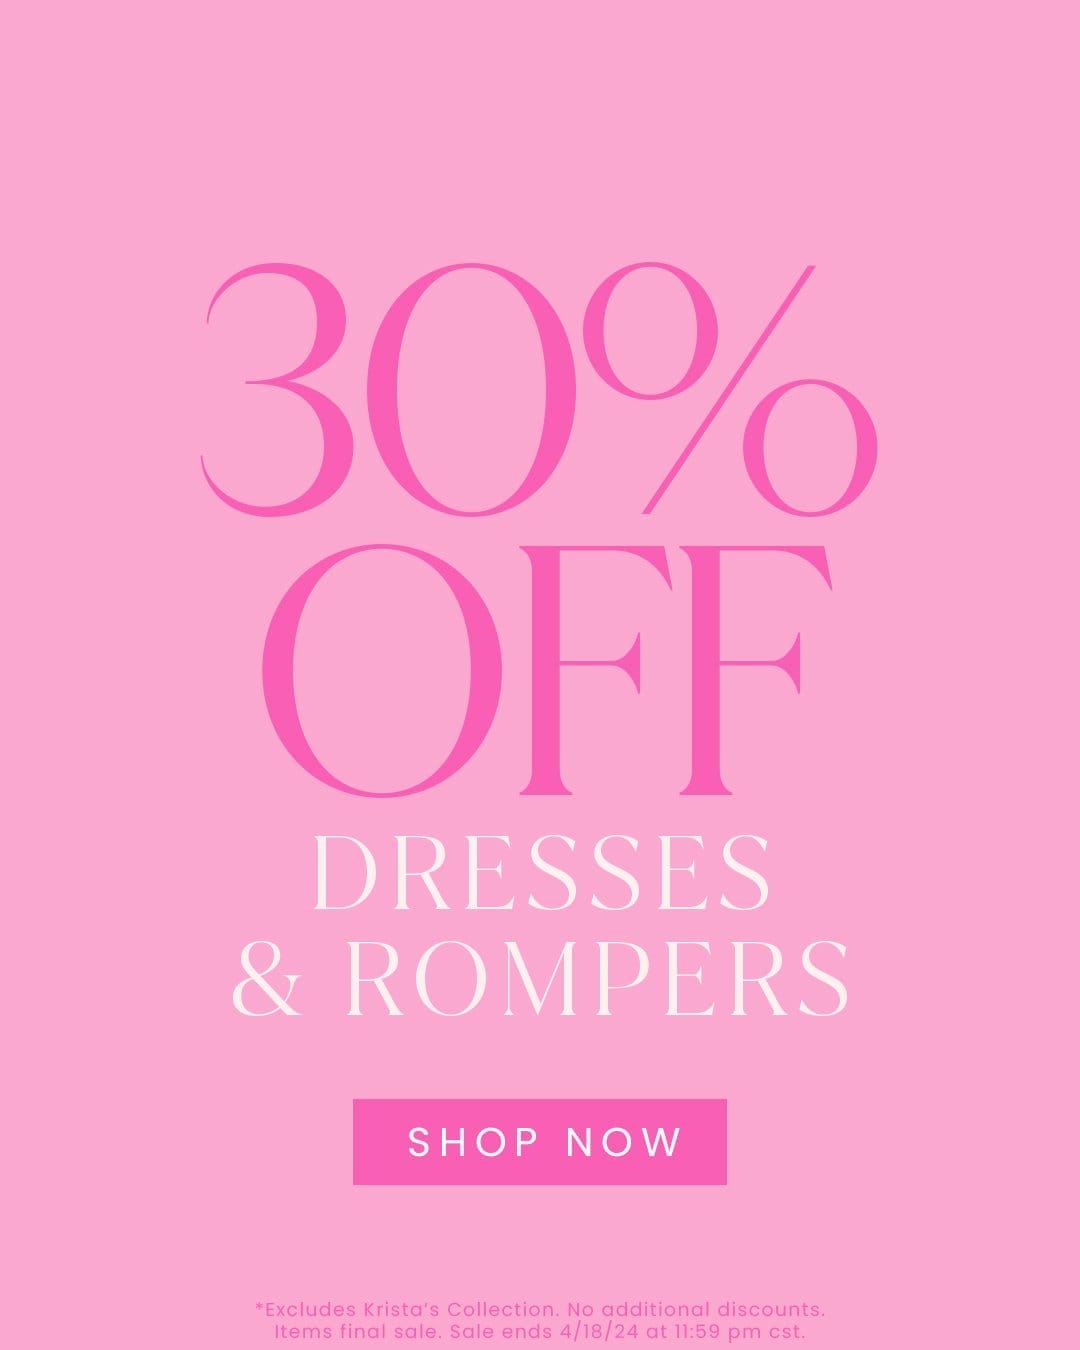 SHOP 30% OFF DRESSES & ROMPERS